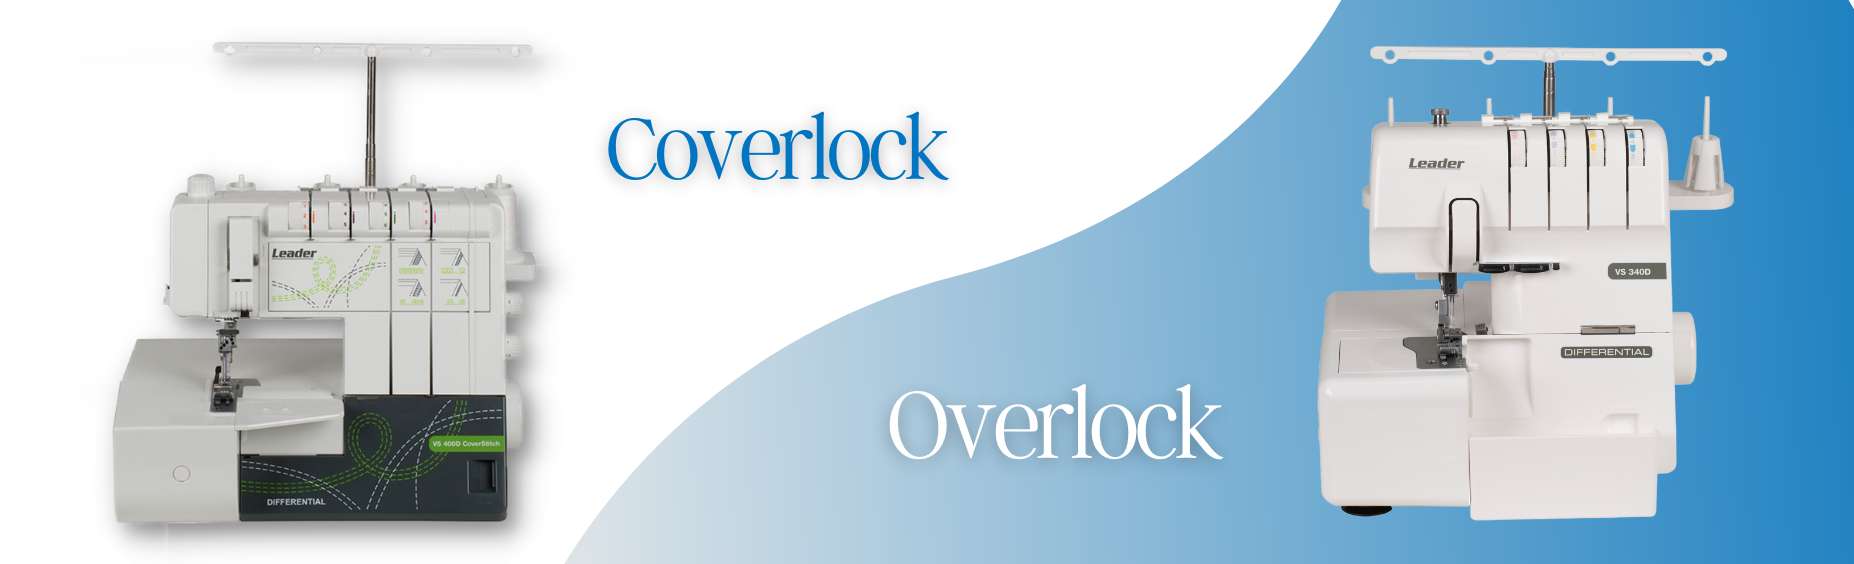 Overlock a coverlock Leader